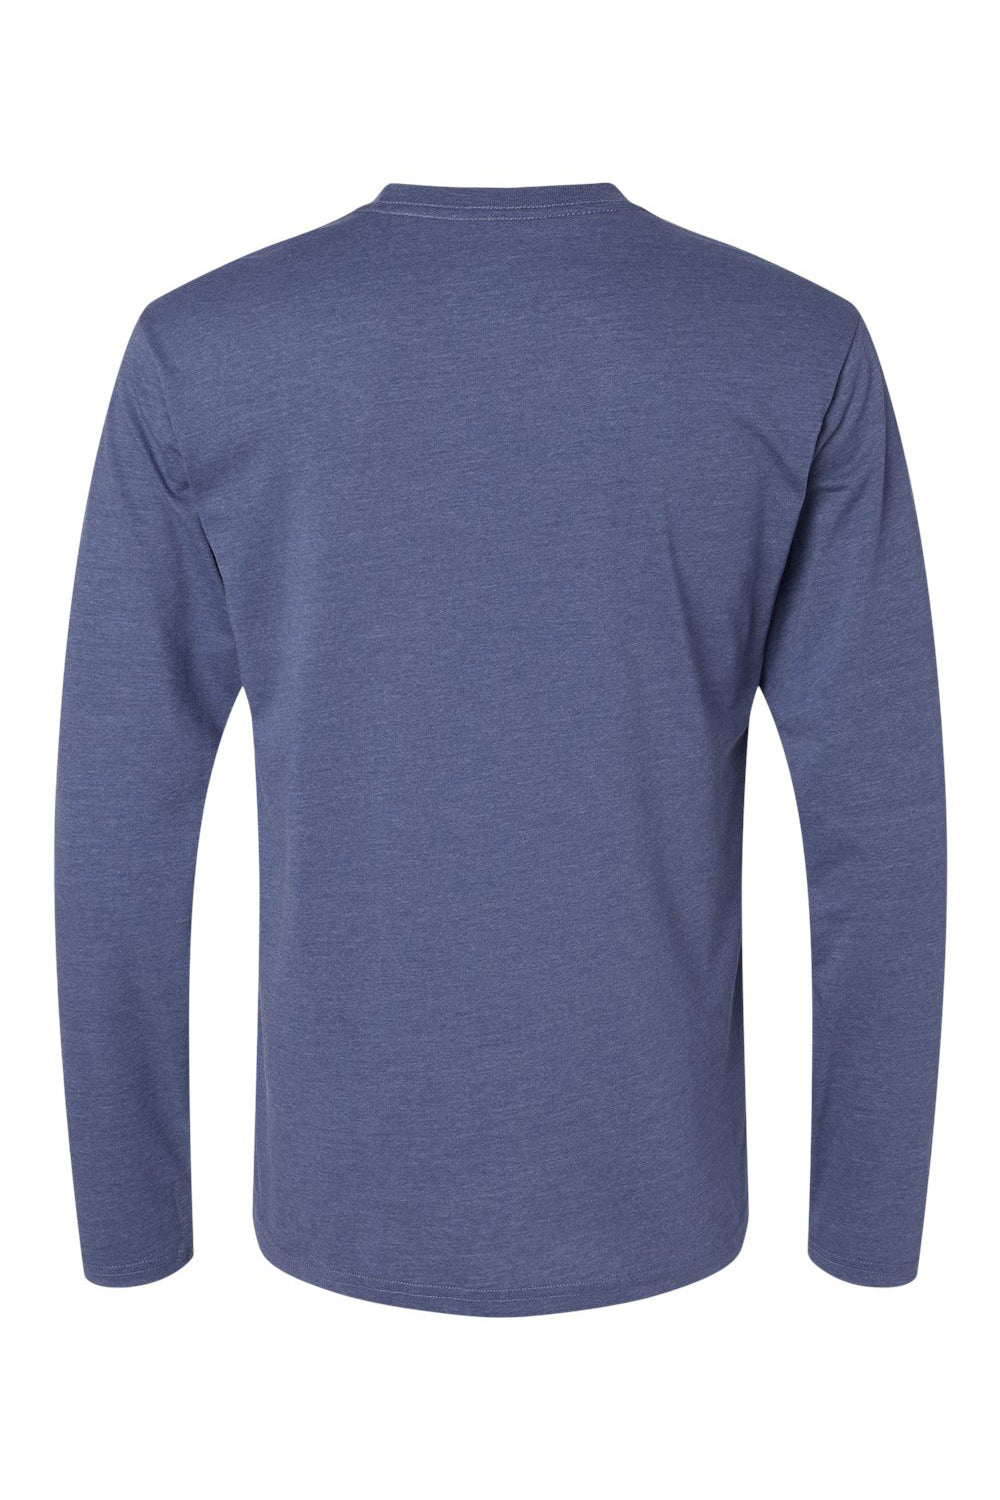 Kastlfel 2016 Mens RecycledSoft Long Sleeve Crewneck T-Shirt Vintage Royal Blue Flat Back